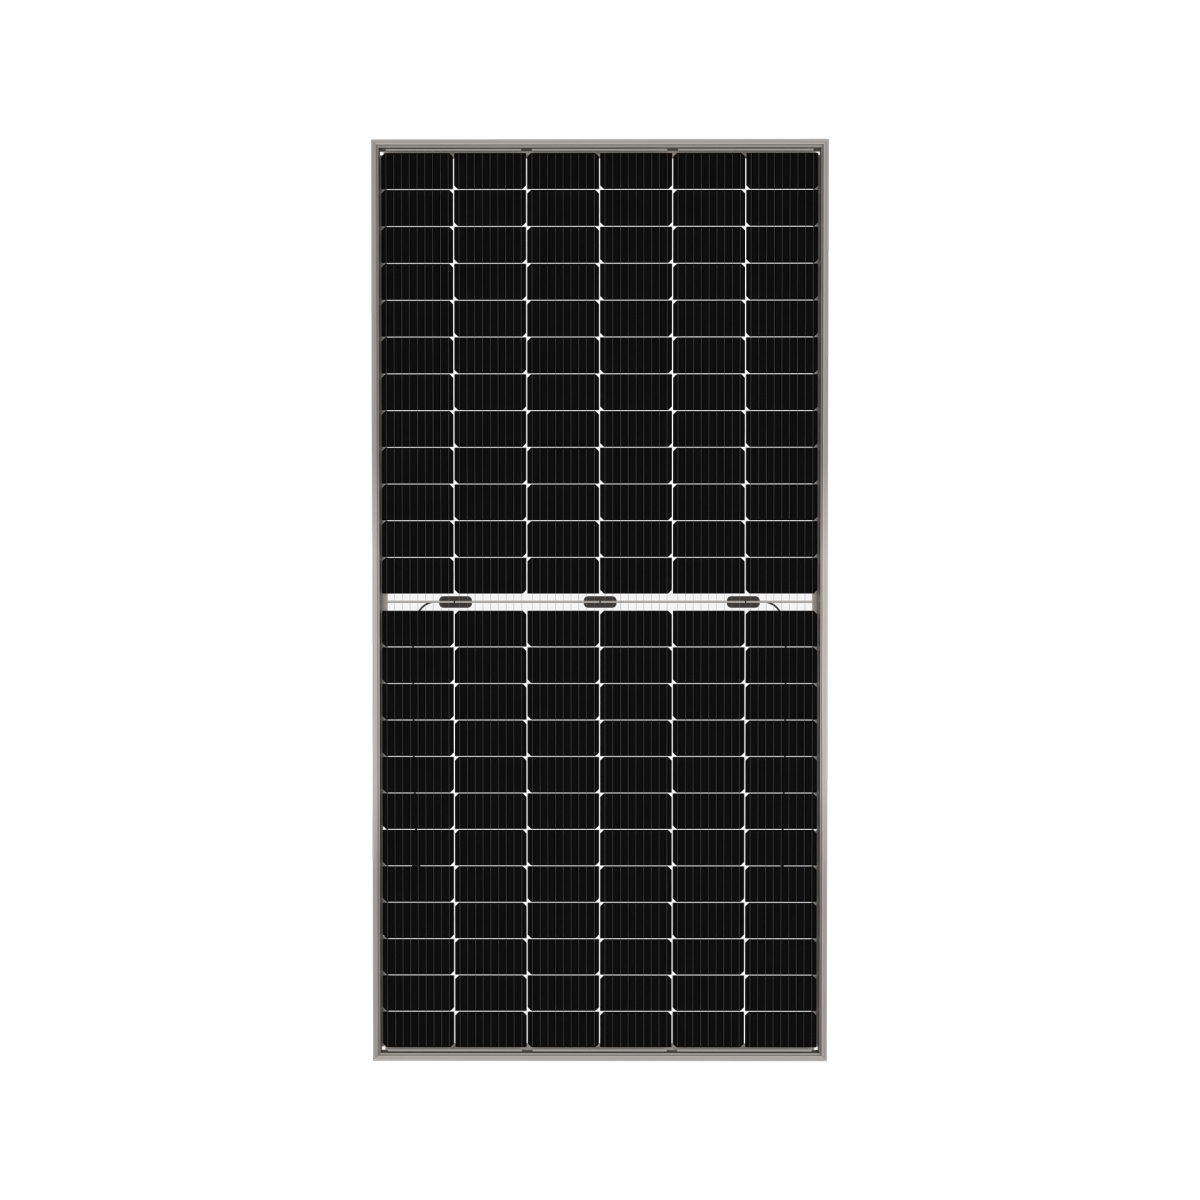 TommaTech 460 Watt 144 Percmono Bifazial Half-Cut Multi Busbar Solarpanel